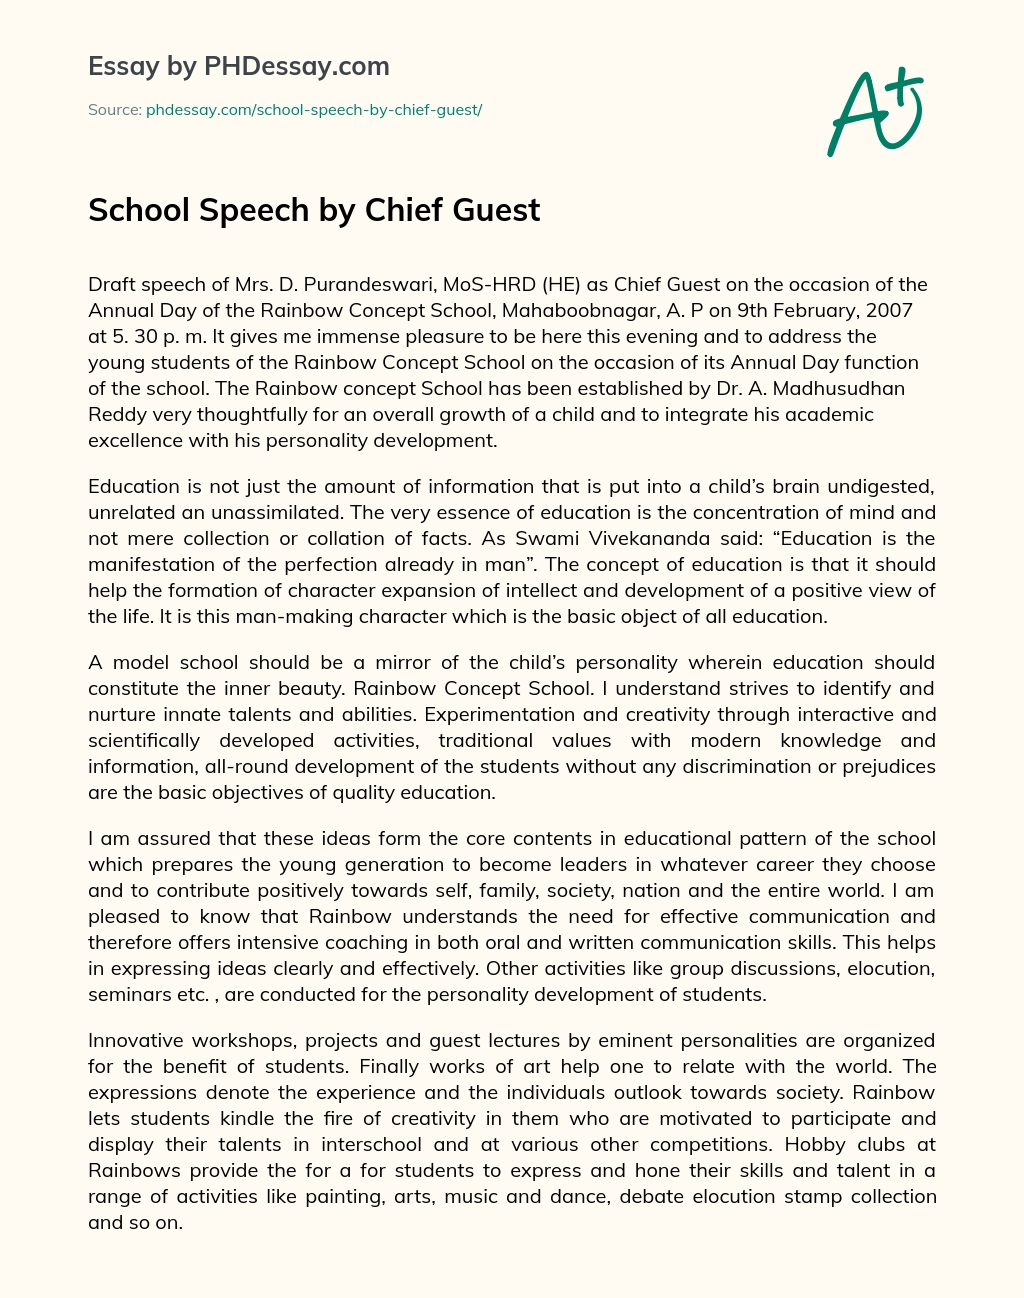 School Speech by Chief Guest essay